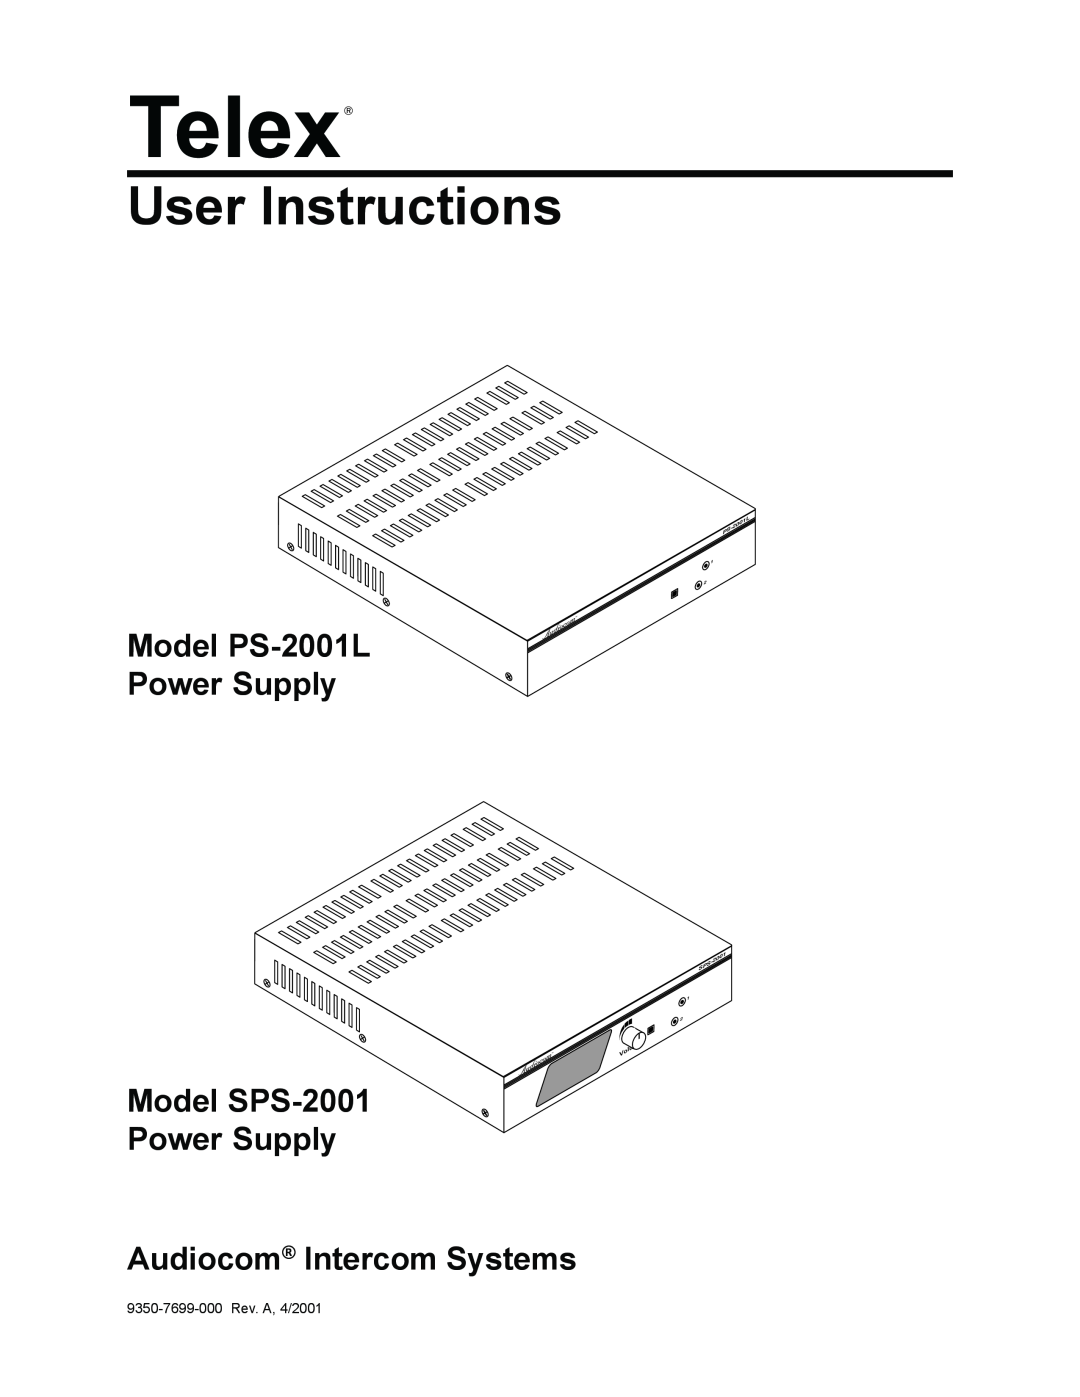 Telex manual User Instructions, Model PS-2001L Power Supply, Model SPS-2001 Power Supply, Audiocom Intercom Systems 